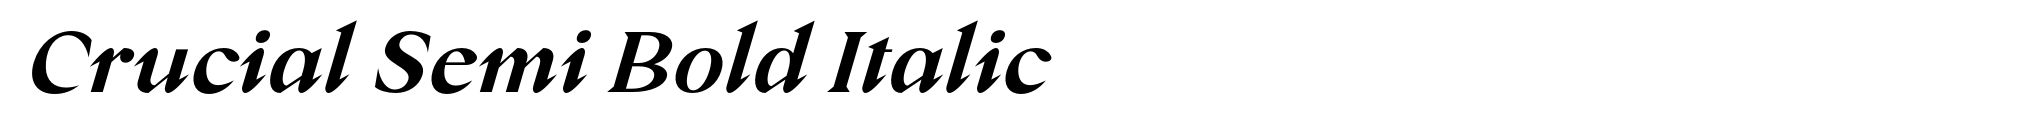 Crucial Semi Bold Italic image